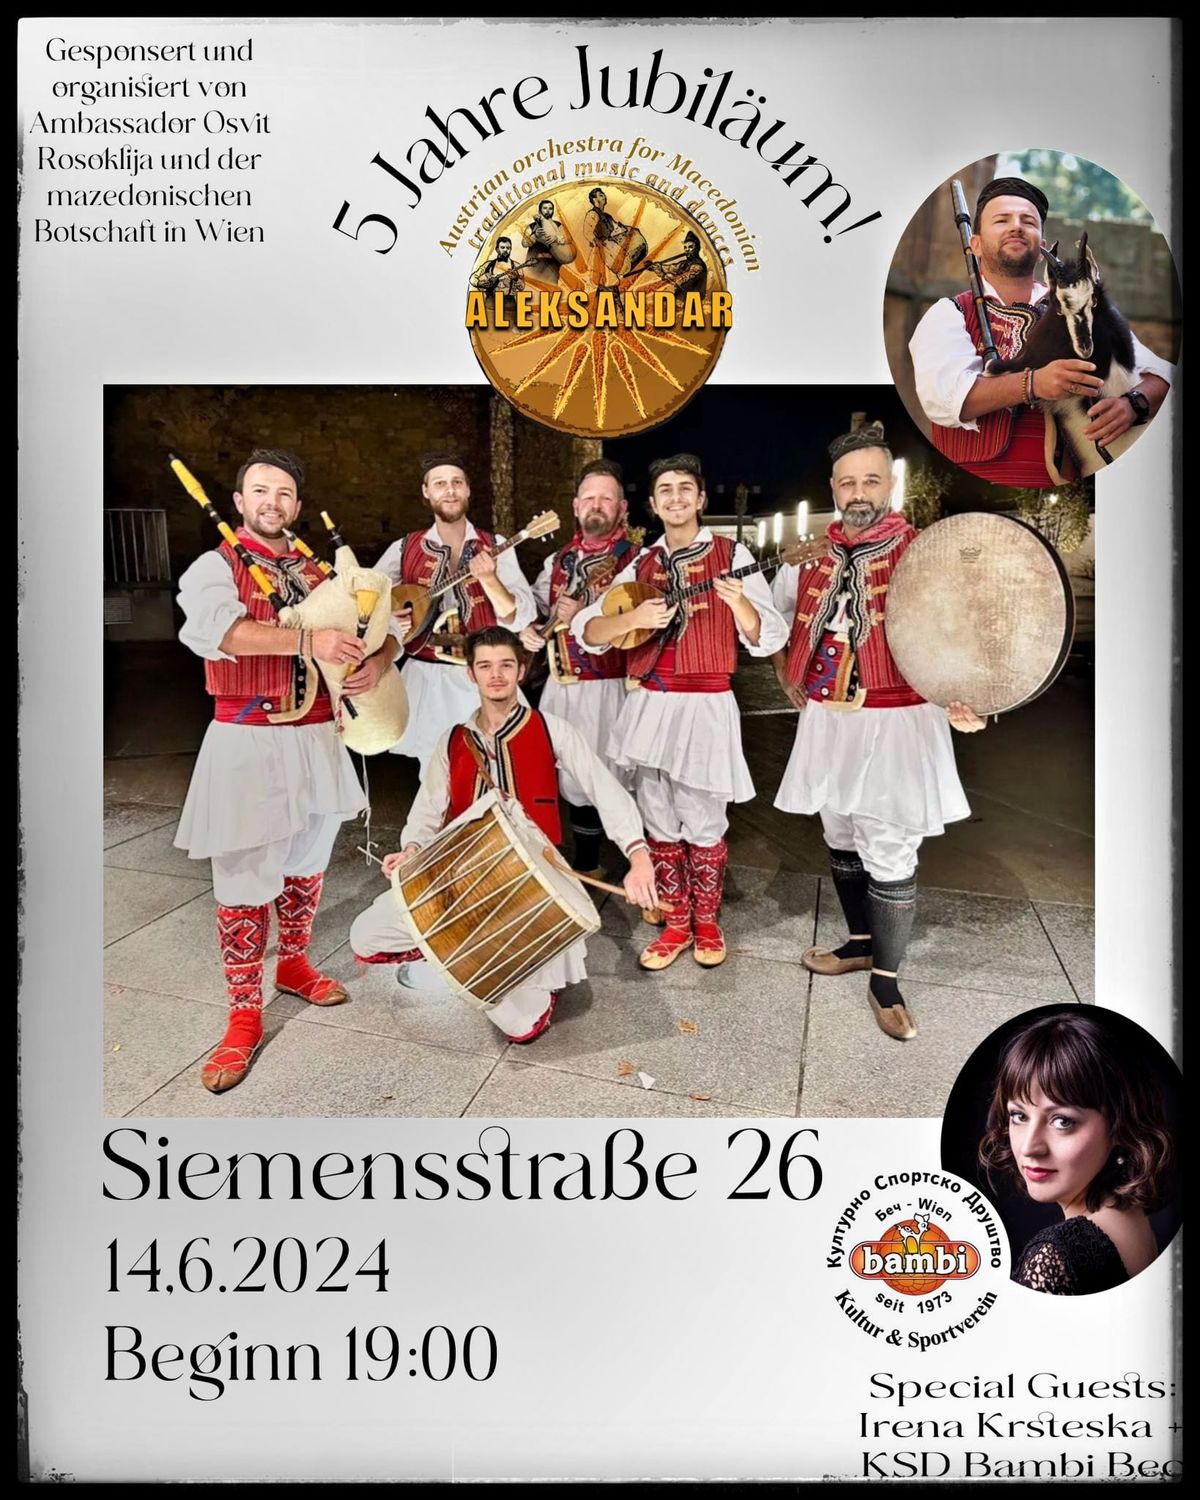 "Orchestra Aleksandar: 5 Years of Viennese Macedonian Musical Magic!"jubilee celebration